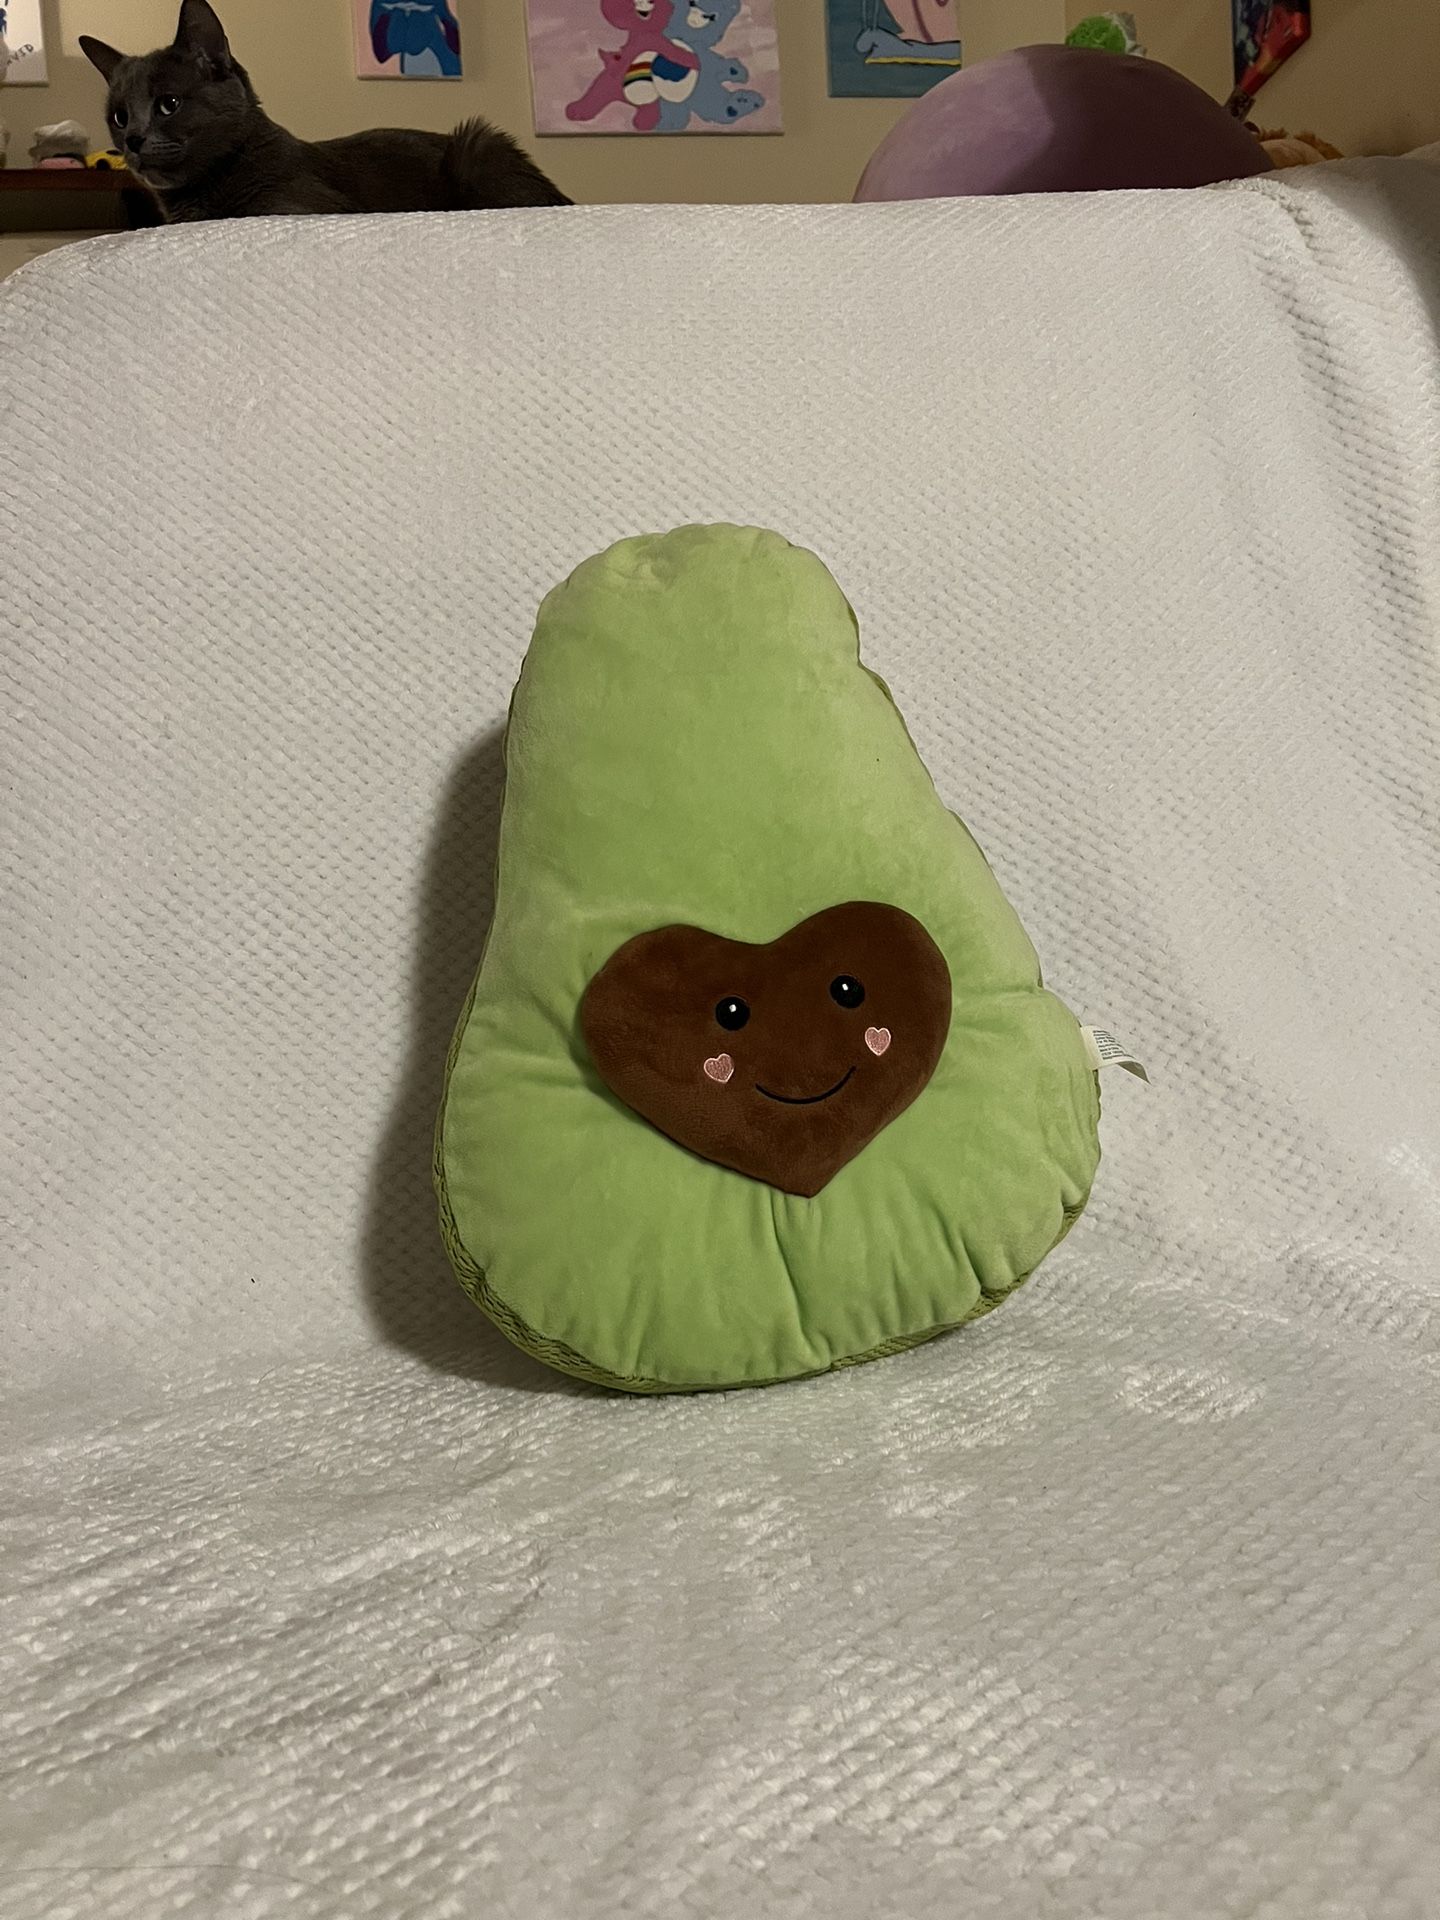 Avocado Stuffed Animal 